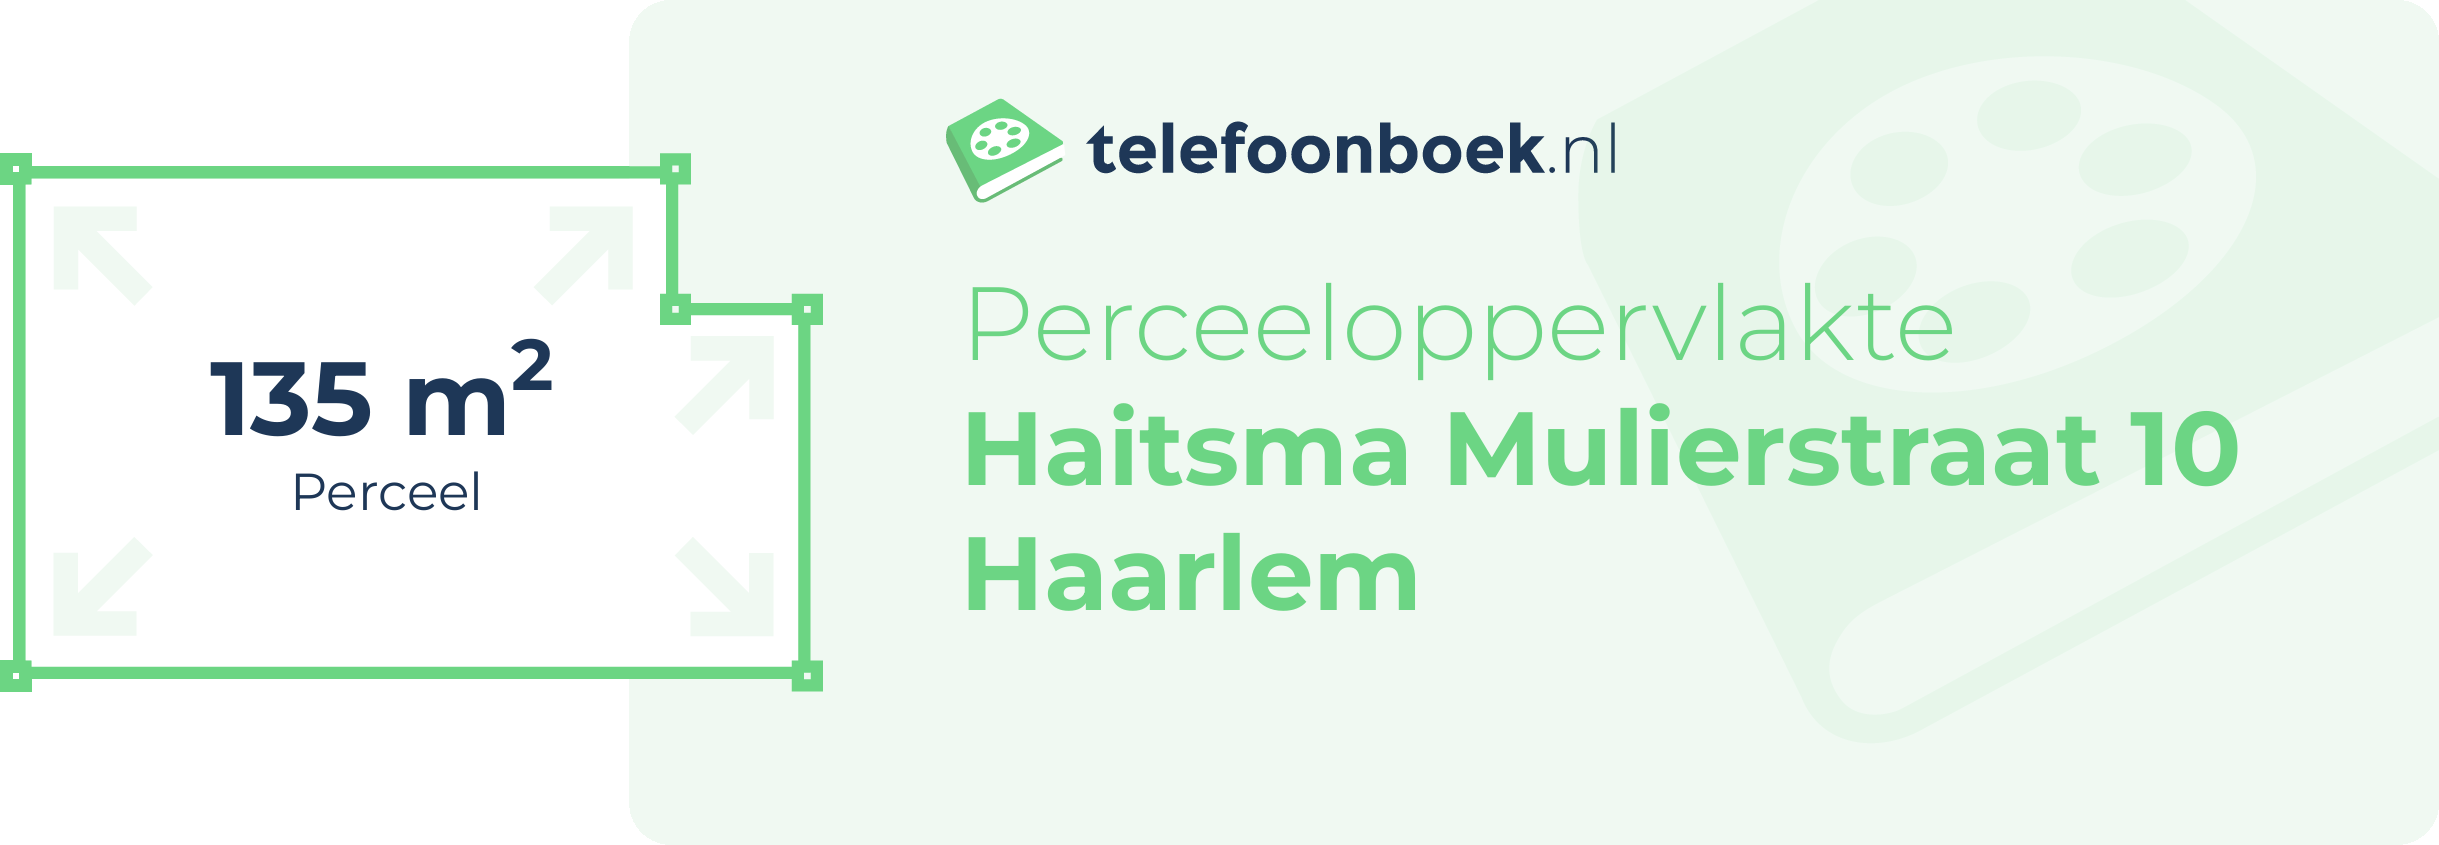 Perceeloppervlakte Haitsma Mulierstraat 10 Haarlem